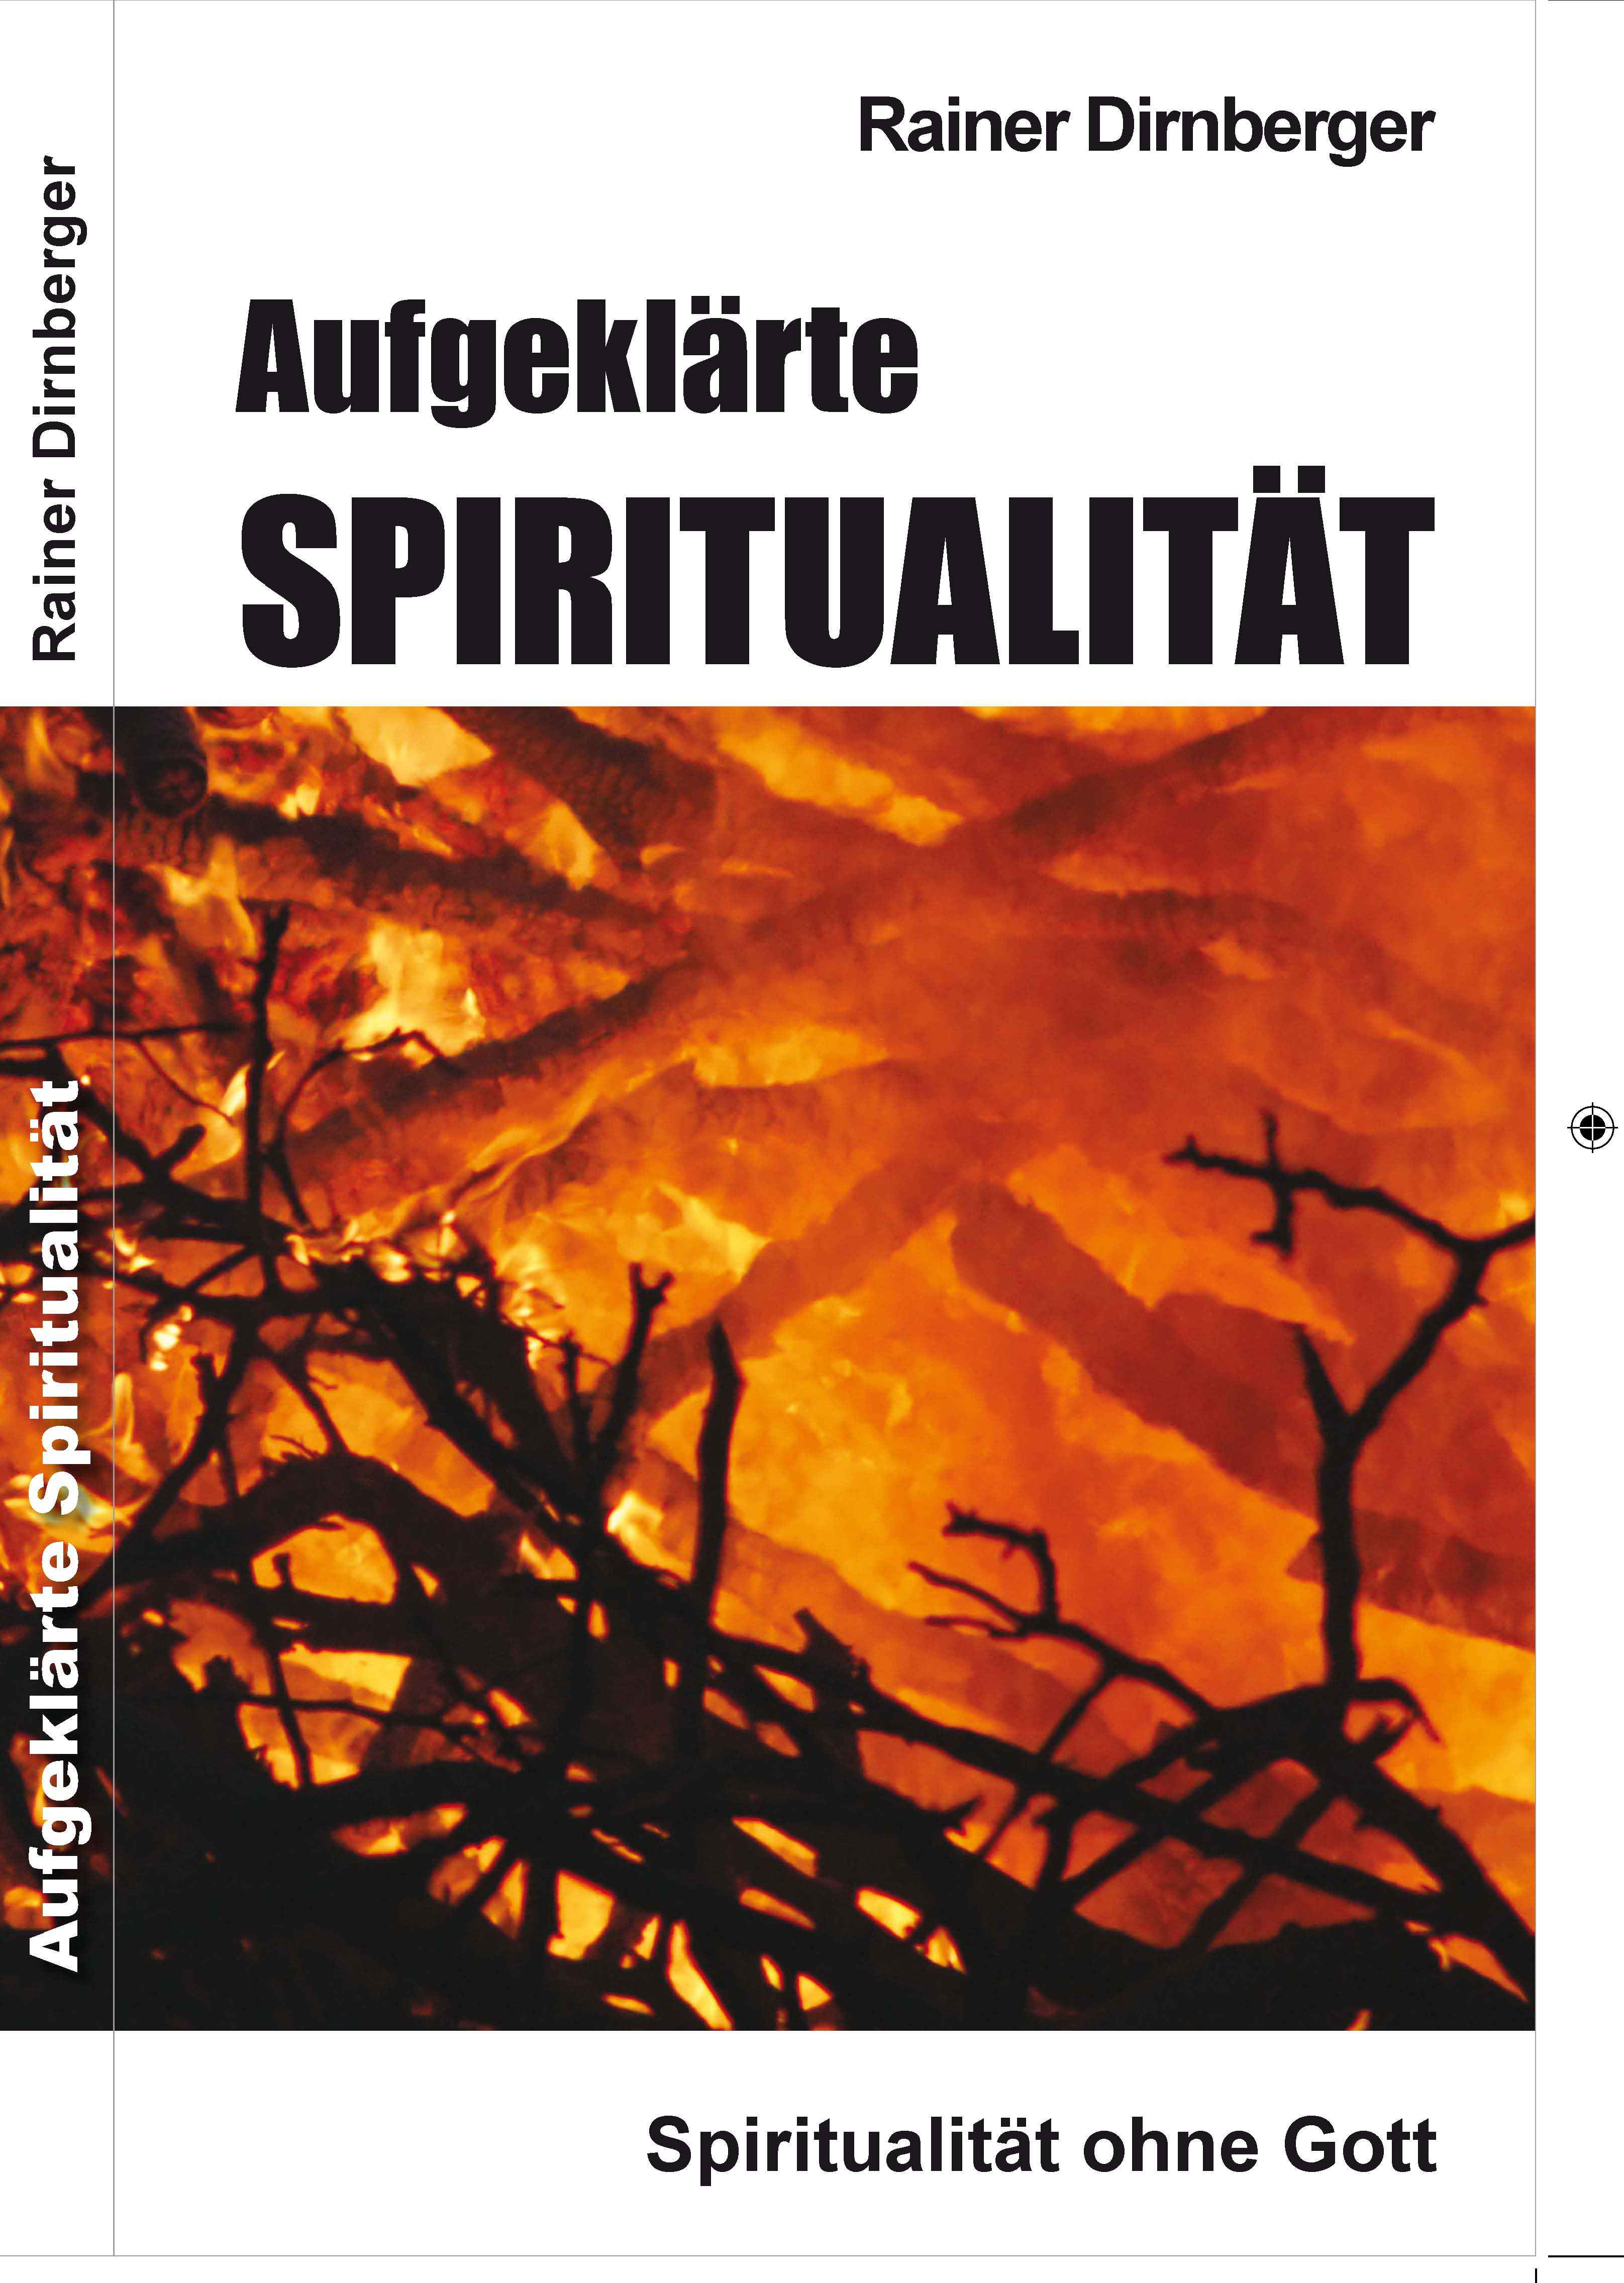 RainerDirnberger_Buch_Spiritualitaet_Cover_hp_.jpg